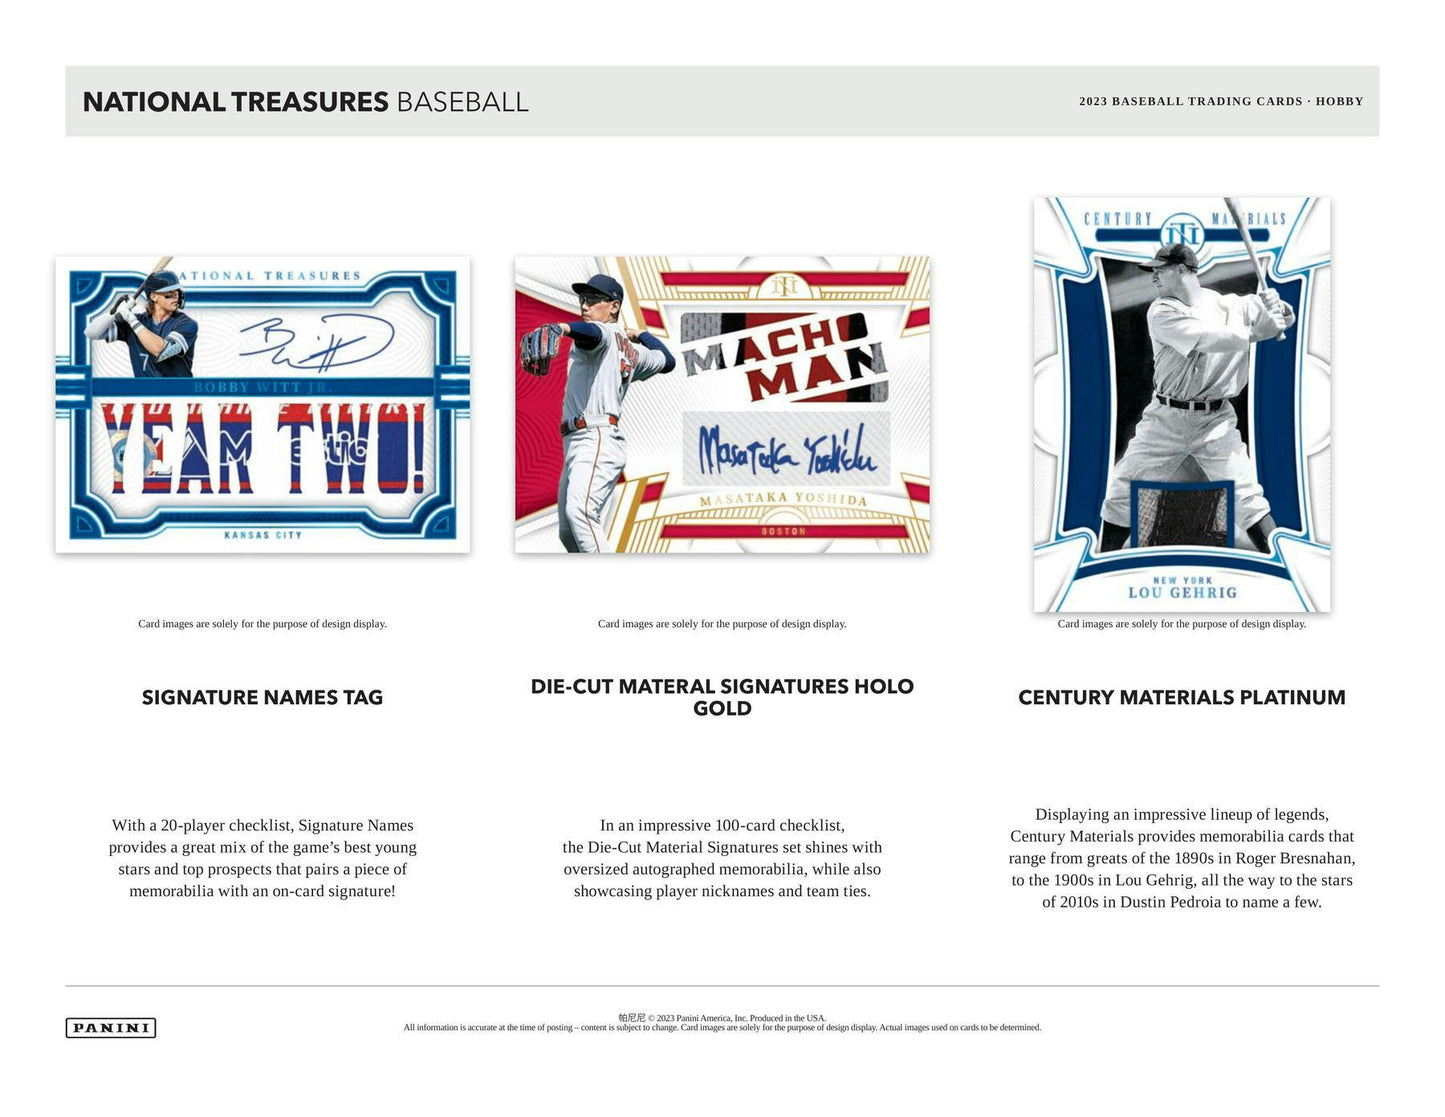 2023 Panini National Treasures Baseball, Hobby Box